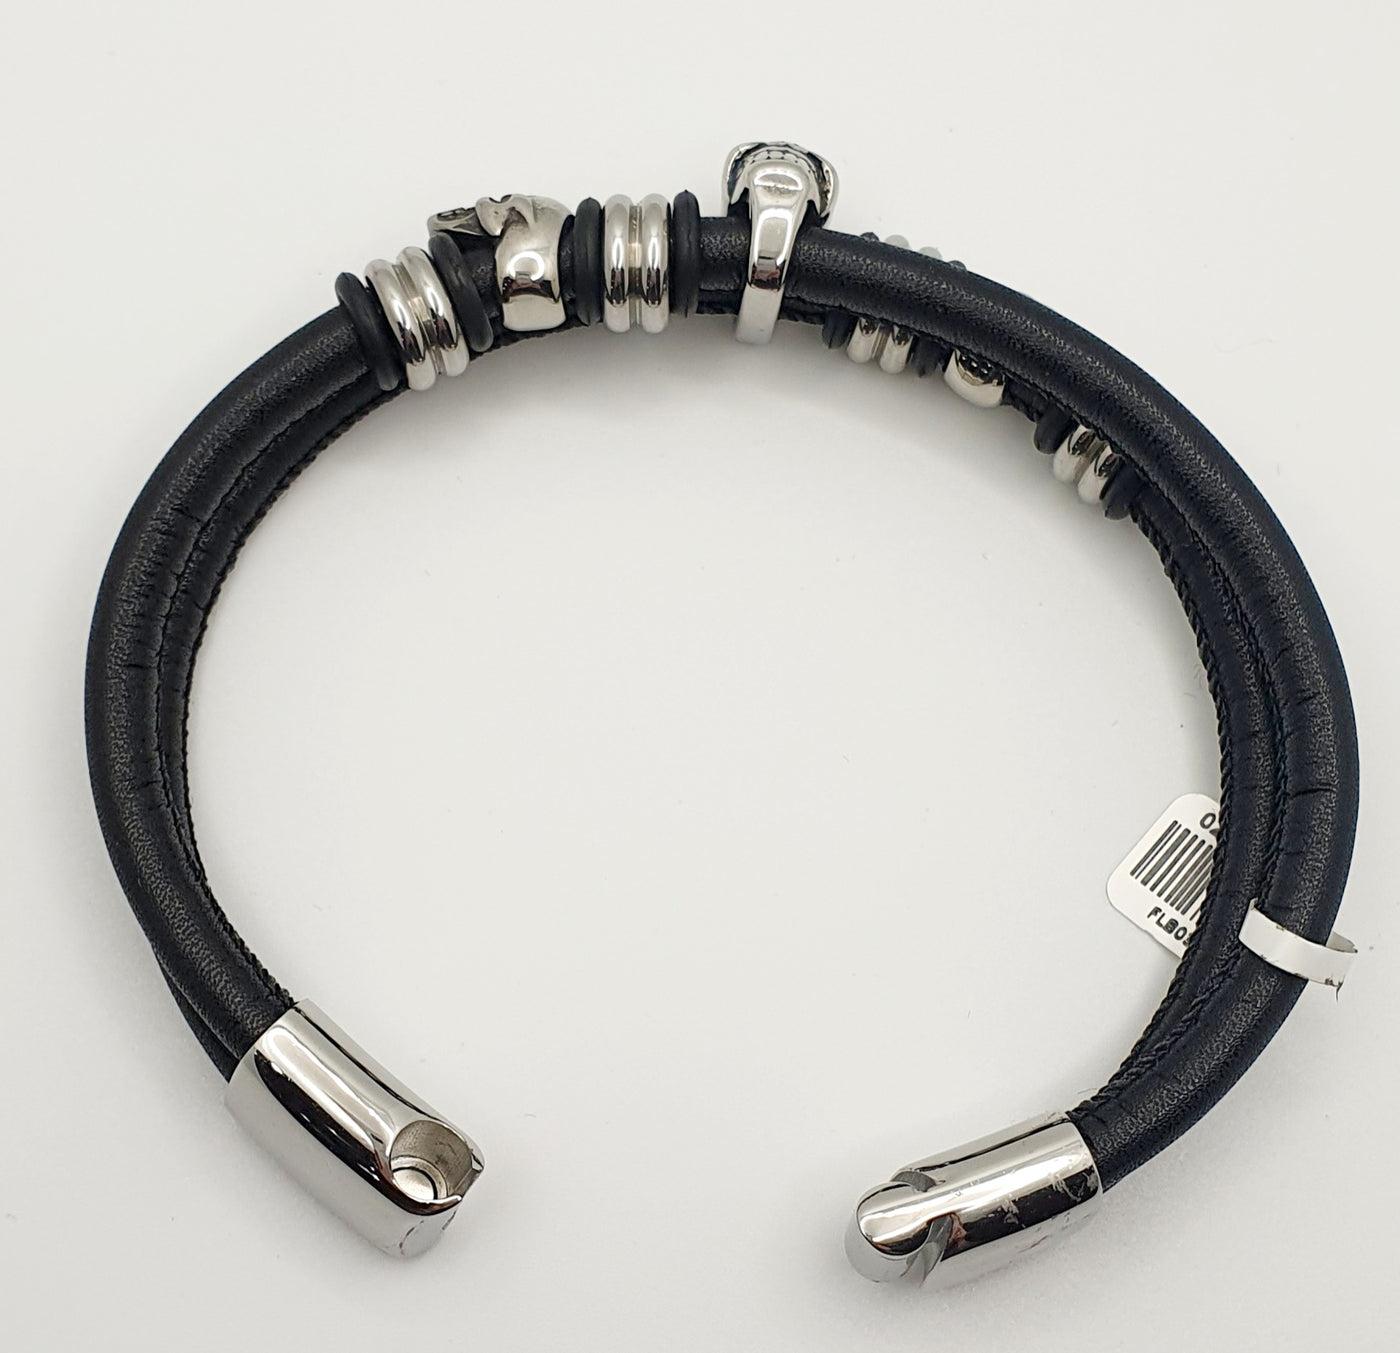 Stainless Steel And Black Leather, Gents Skull Bracelet. 22cm